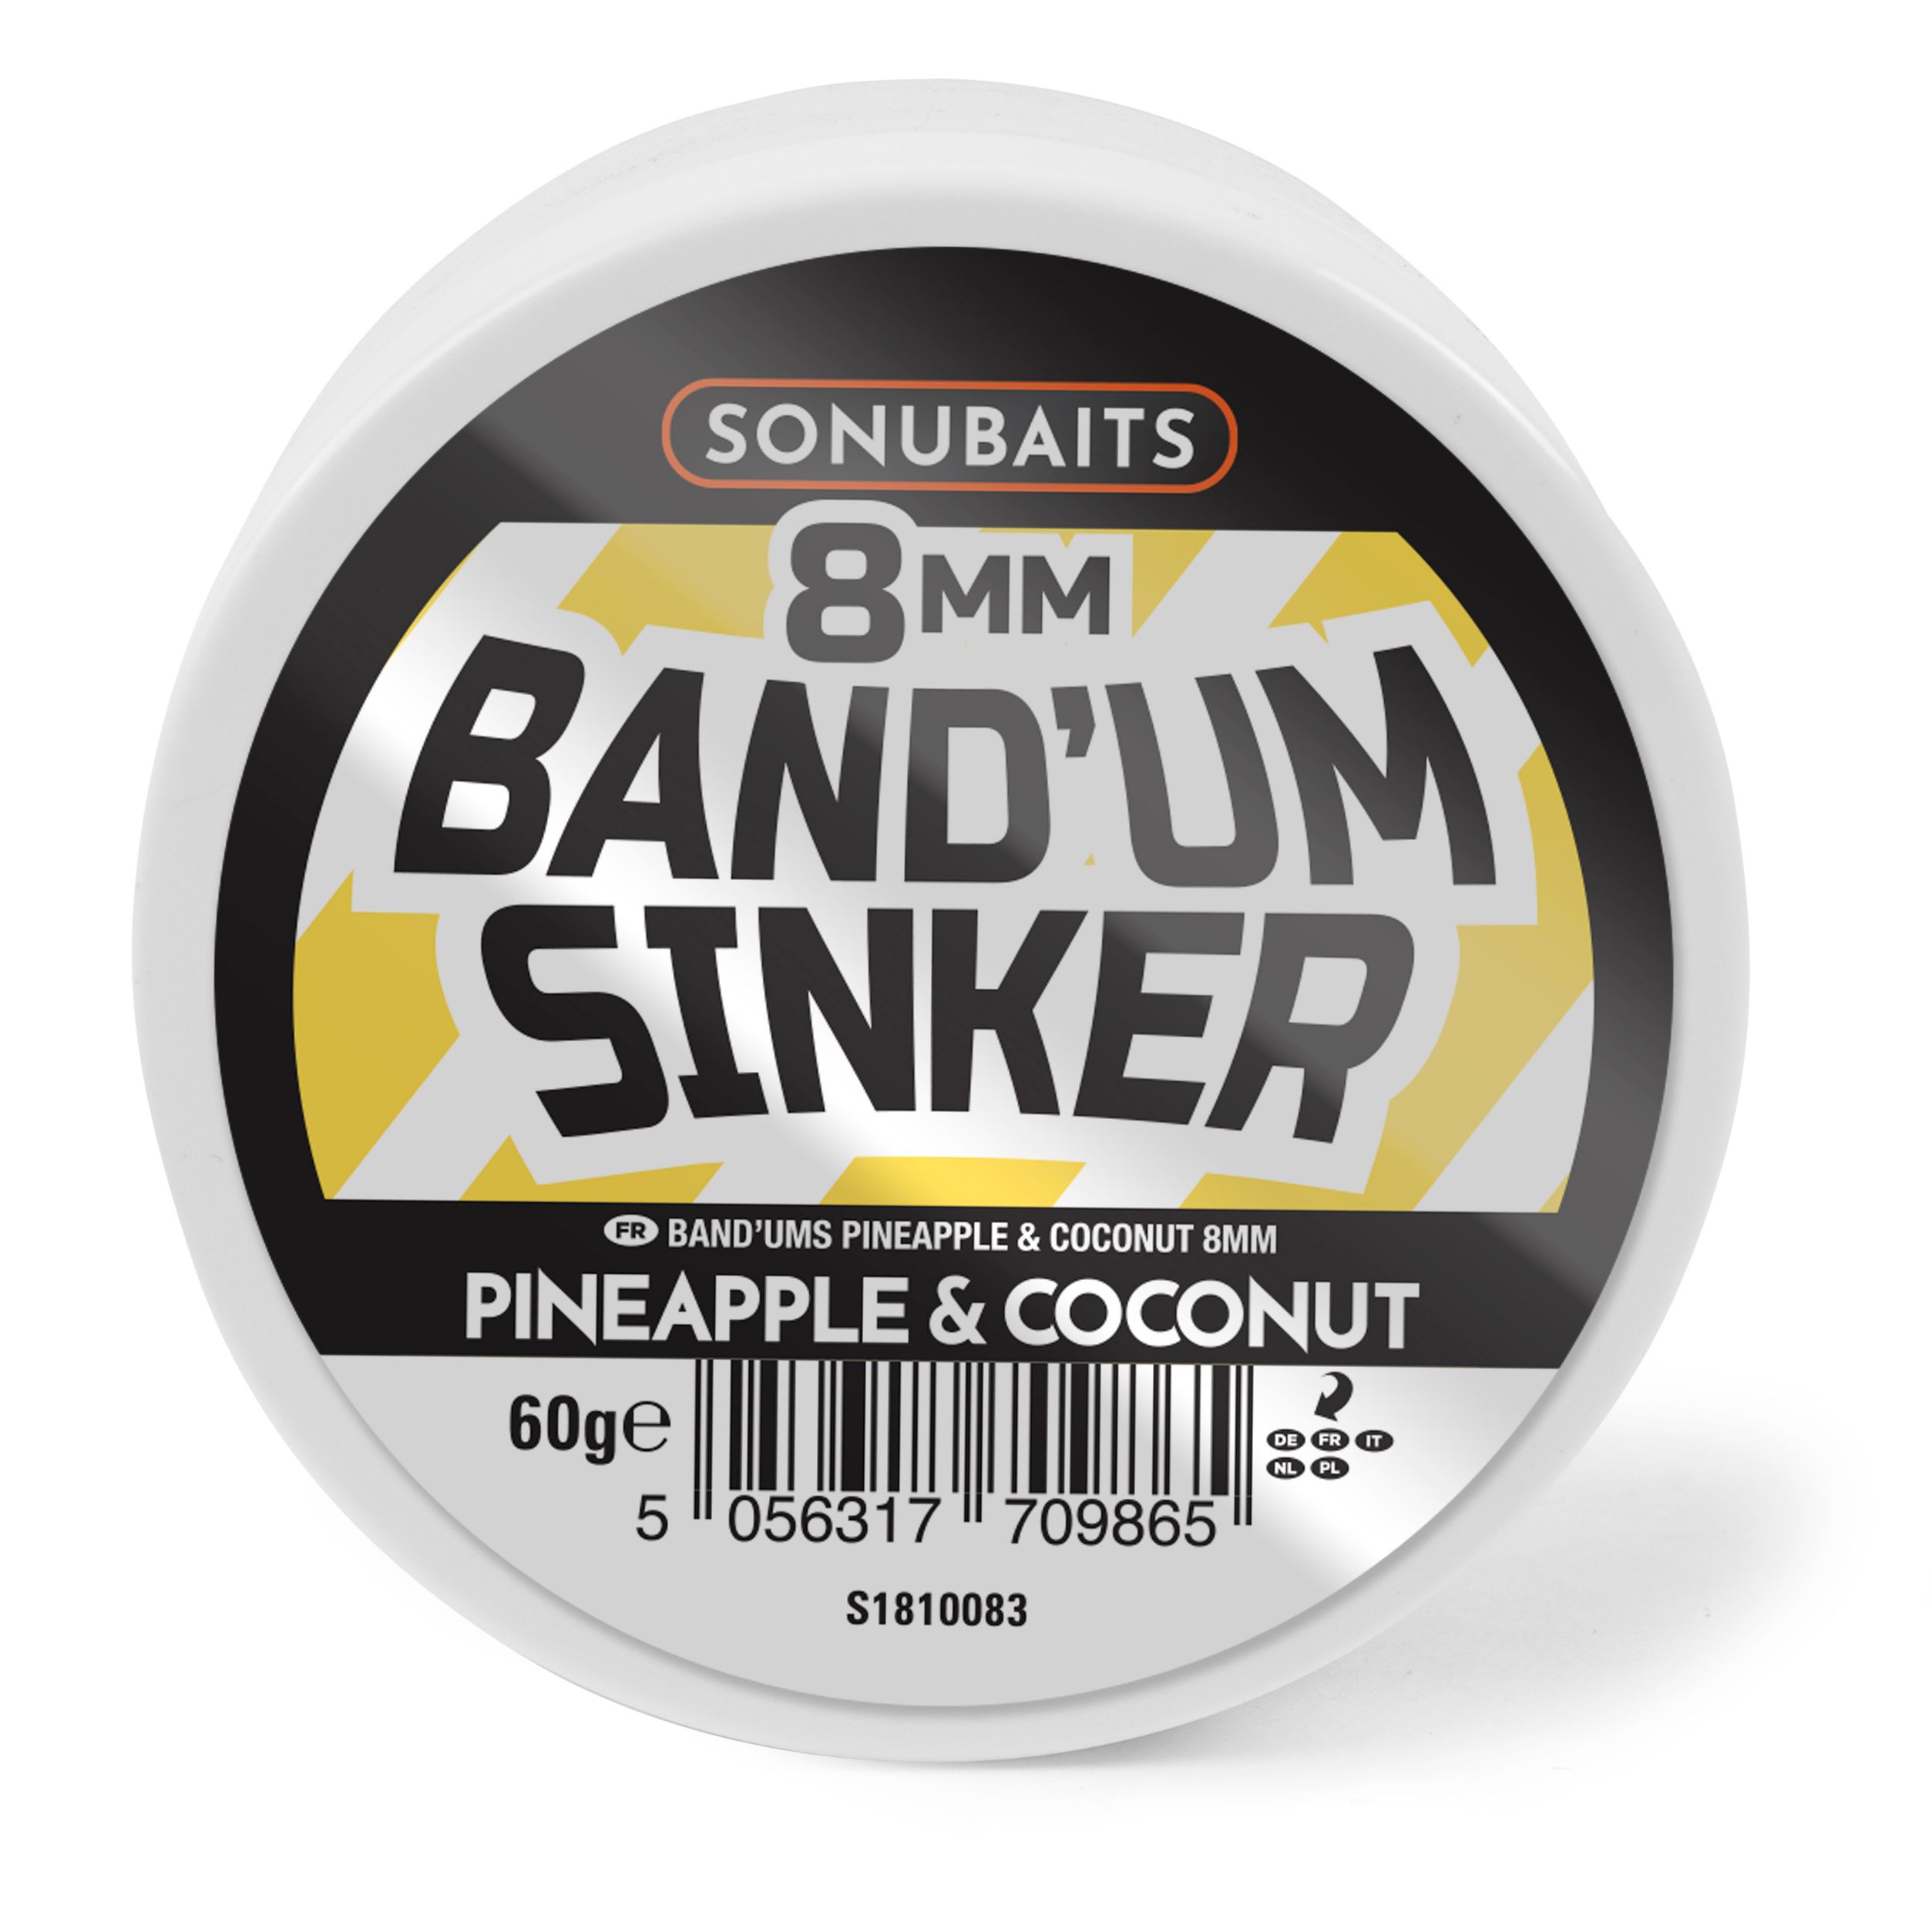 Bouillettes Sonubaits Band'um Sinker 8mm - Pineapple & Coconut